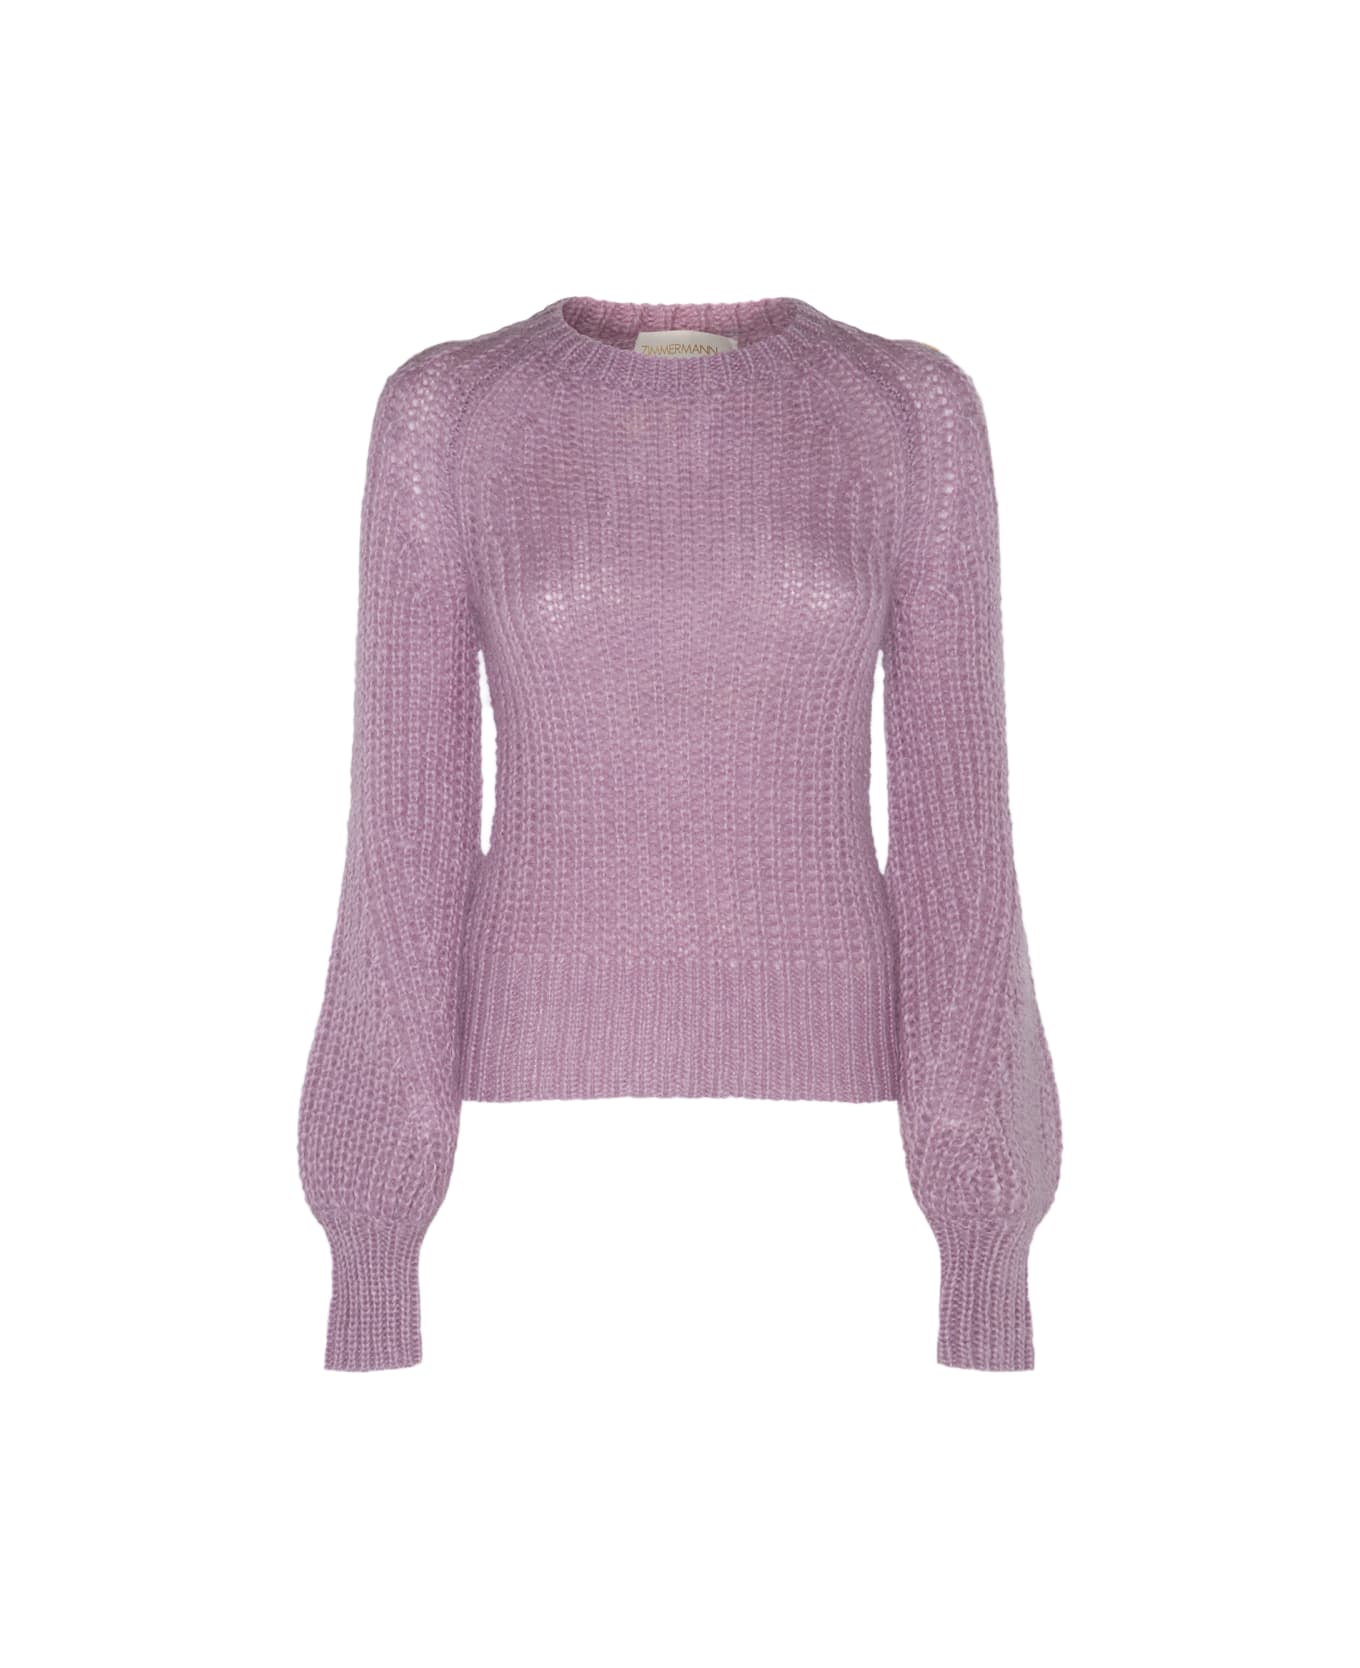 Zimmermann Dusty Lilac Mohair Blend Sweater - DUSTY LILAC